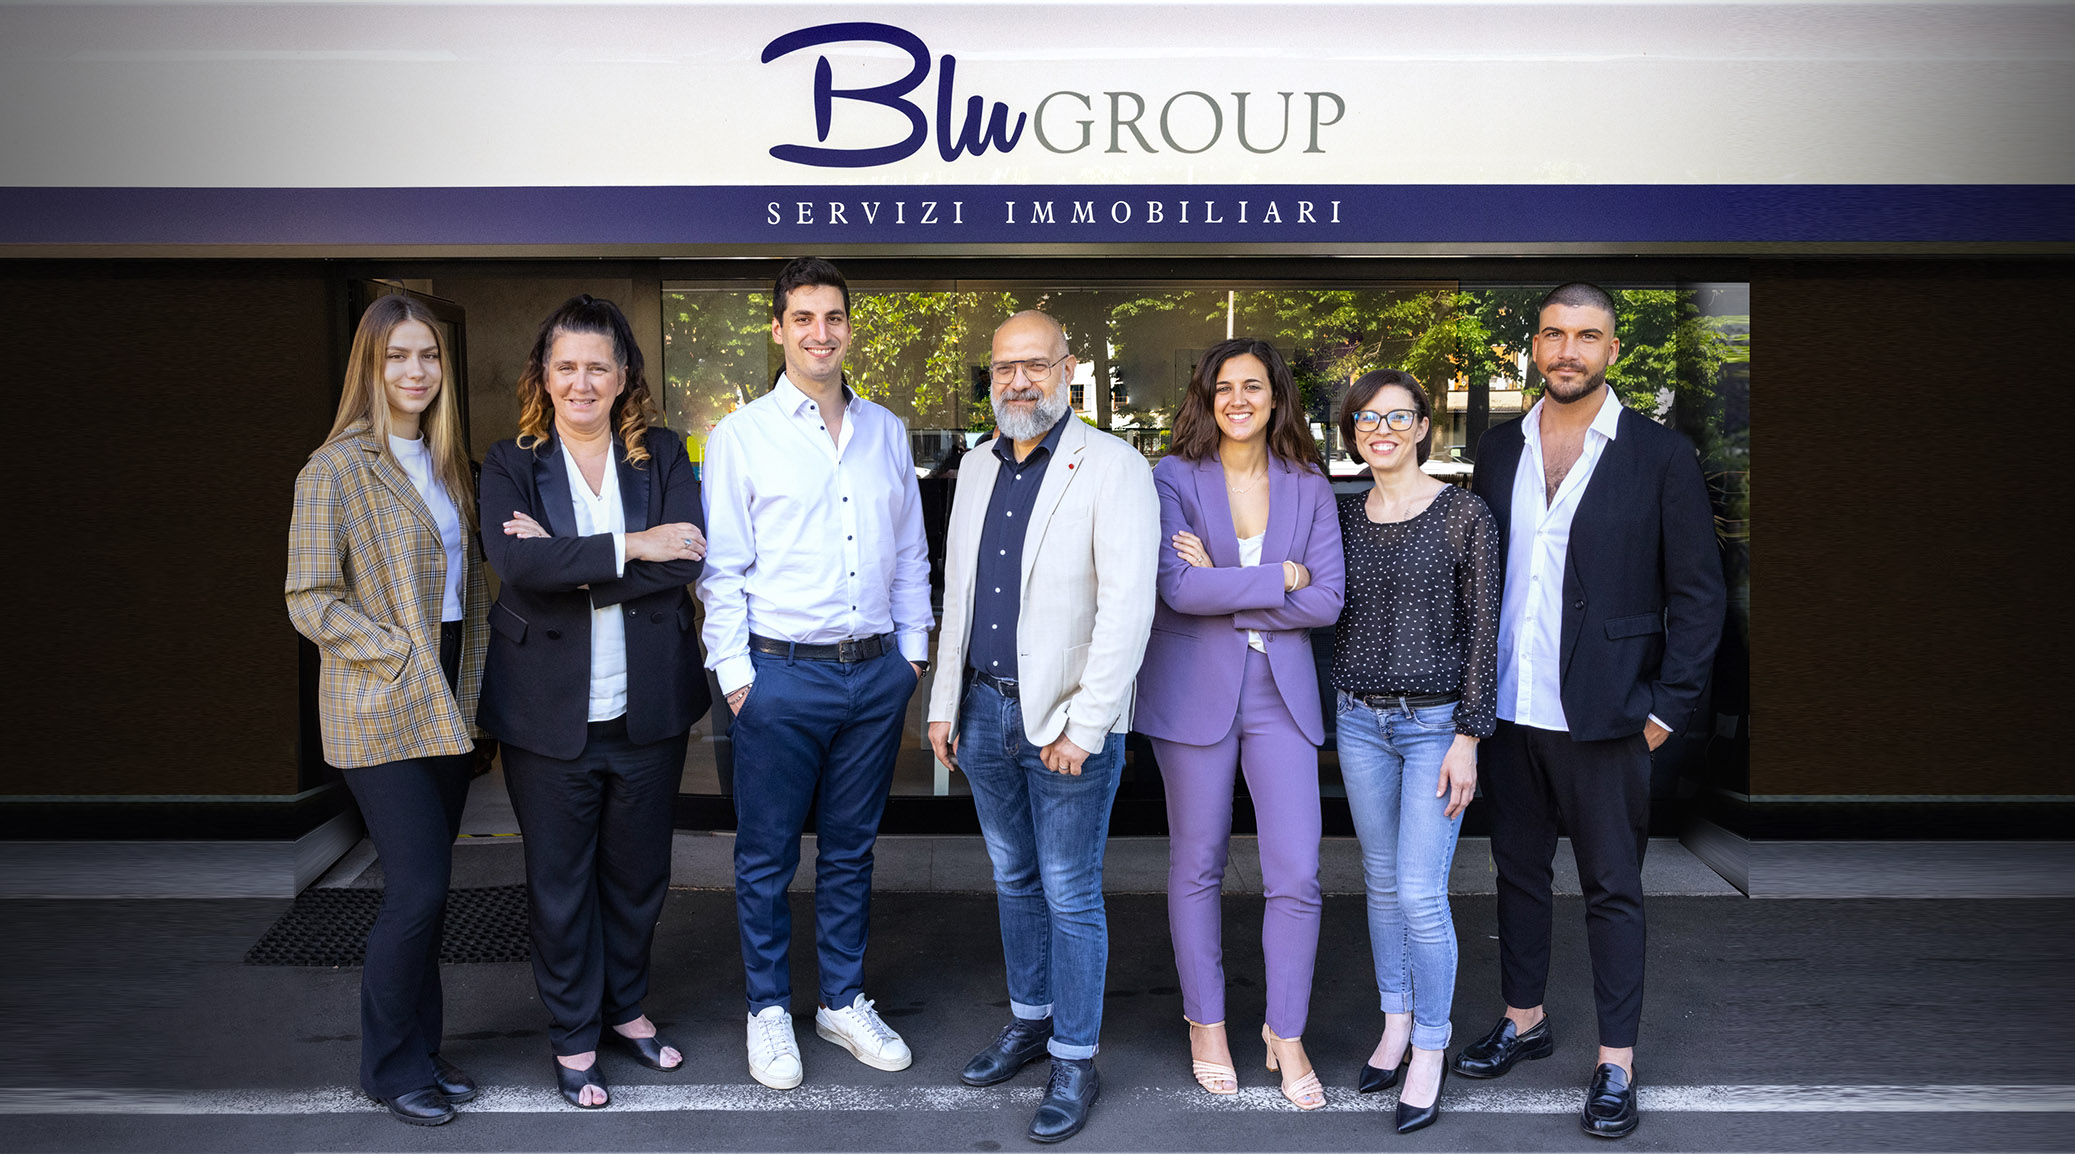 Blu Group - Servizi Immobiliari